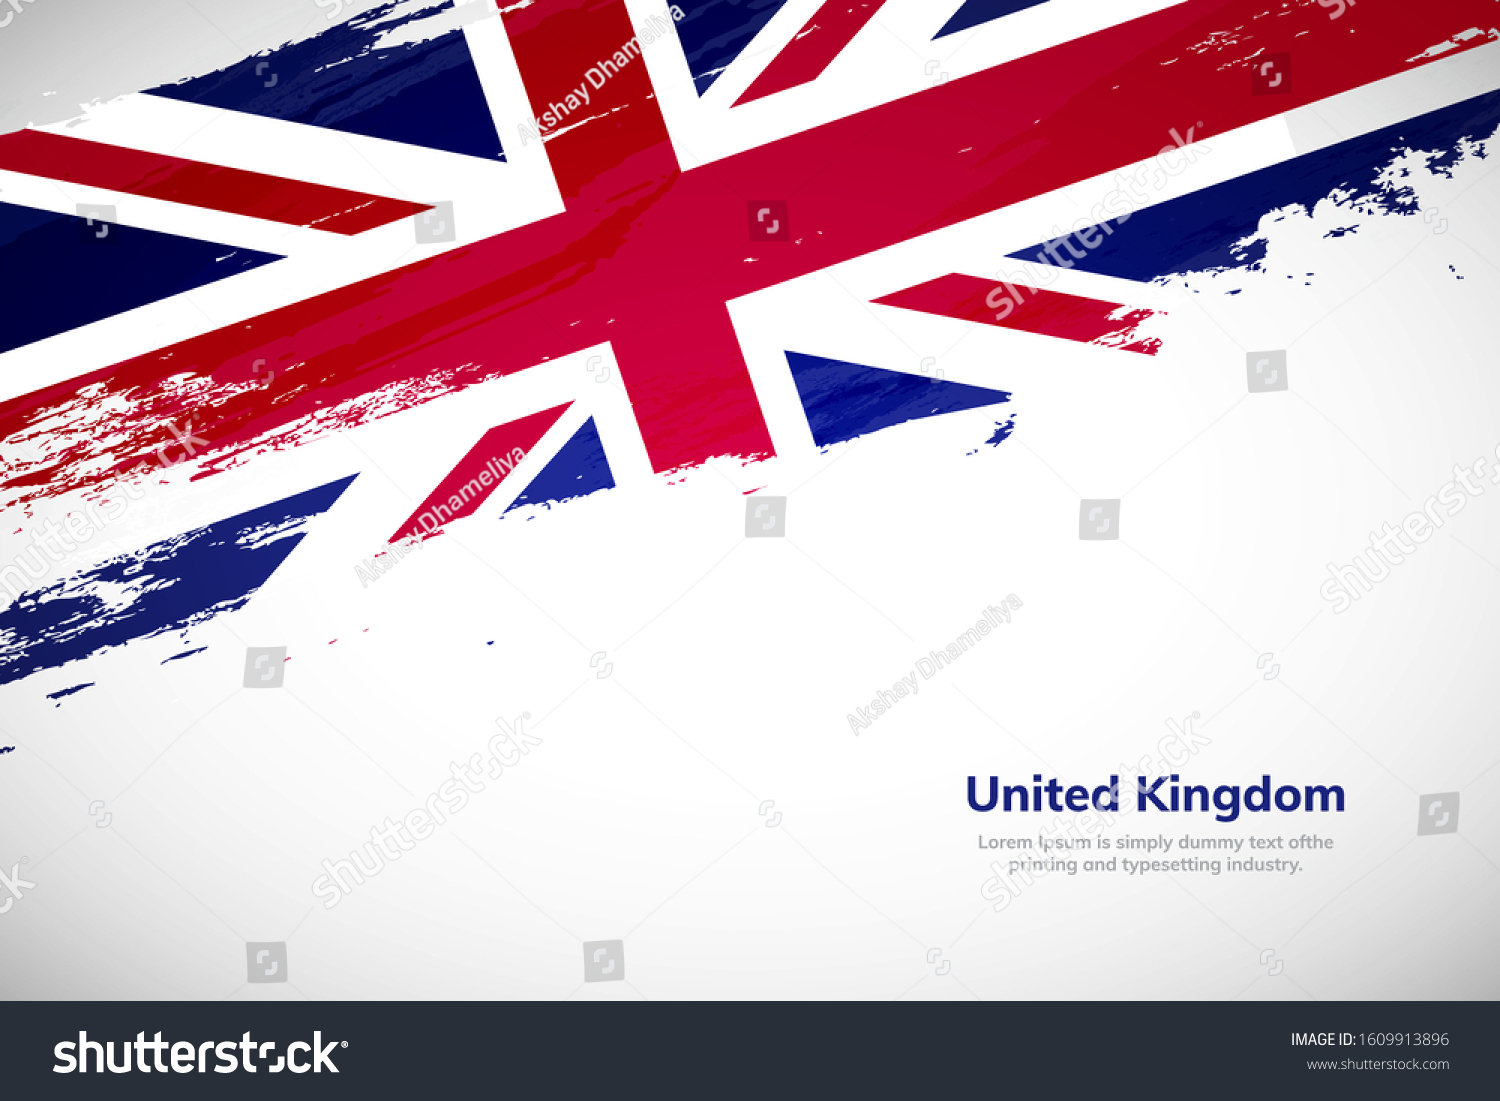 SVG of United Kingdom flag made in brush stroke background. National day of United Kingdom. Creative United Kingdom national country flag icon. Abstract painted grunge style brush flag background. svg